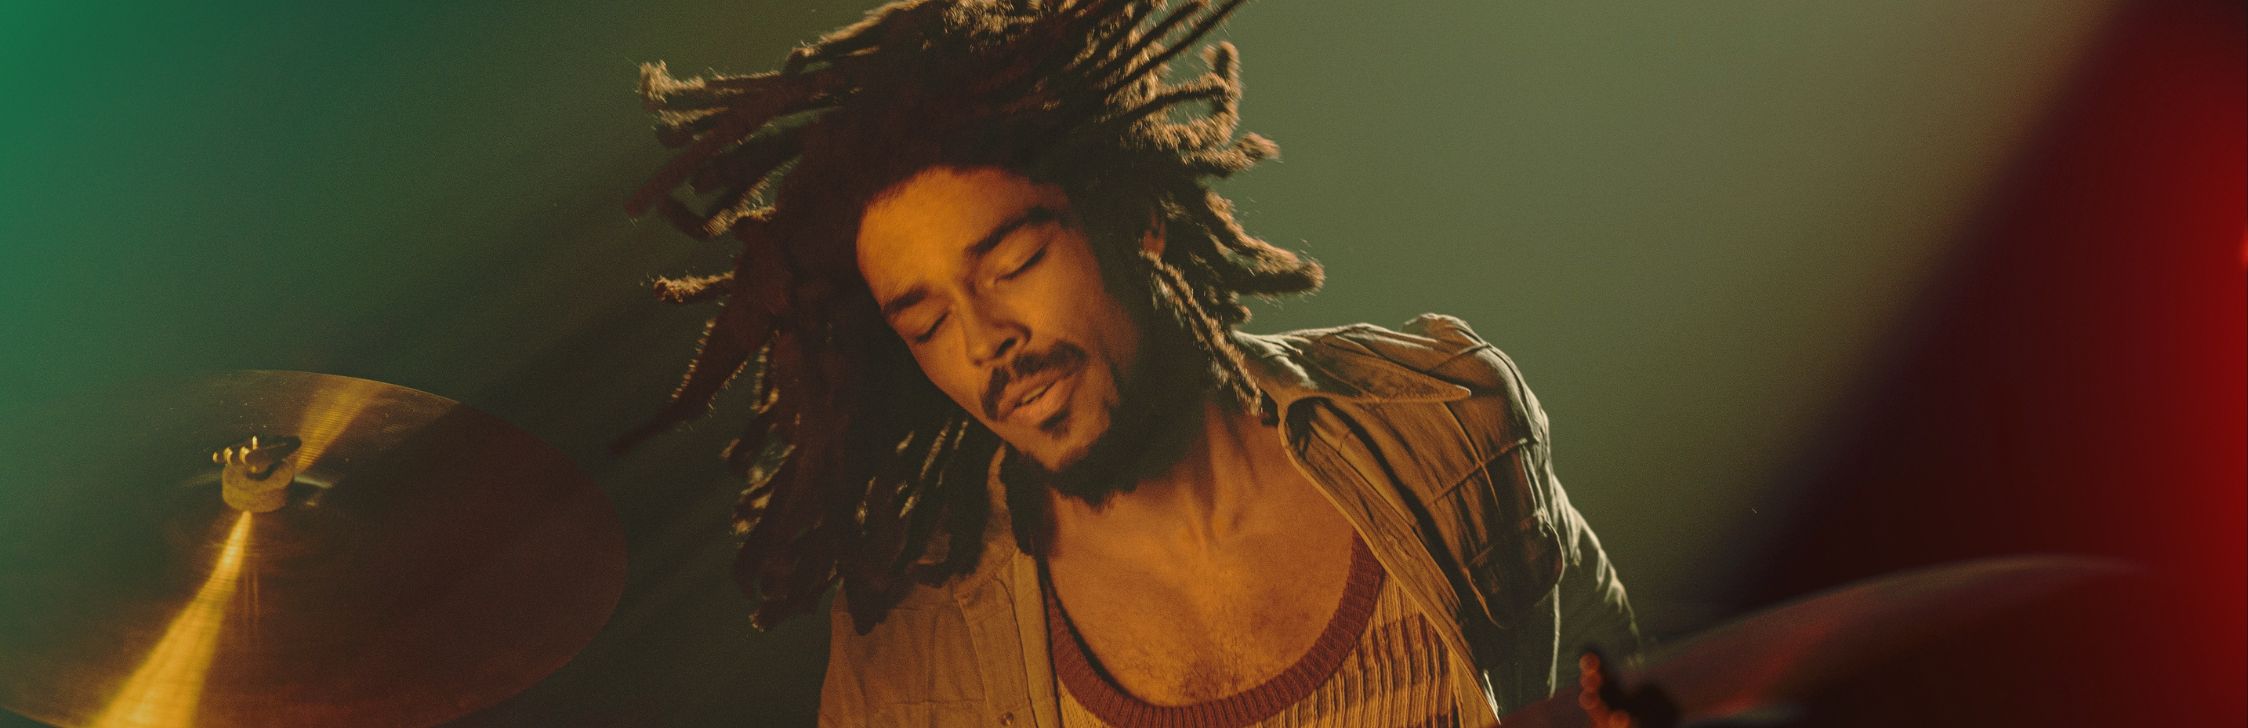 One Love is Bob Marley's message to us all - JB Hi-Fi